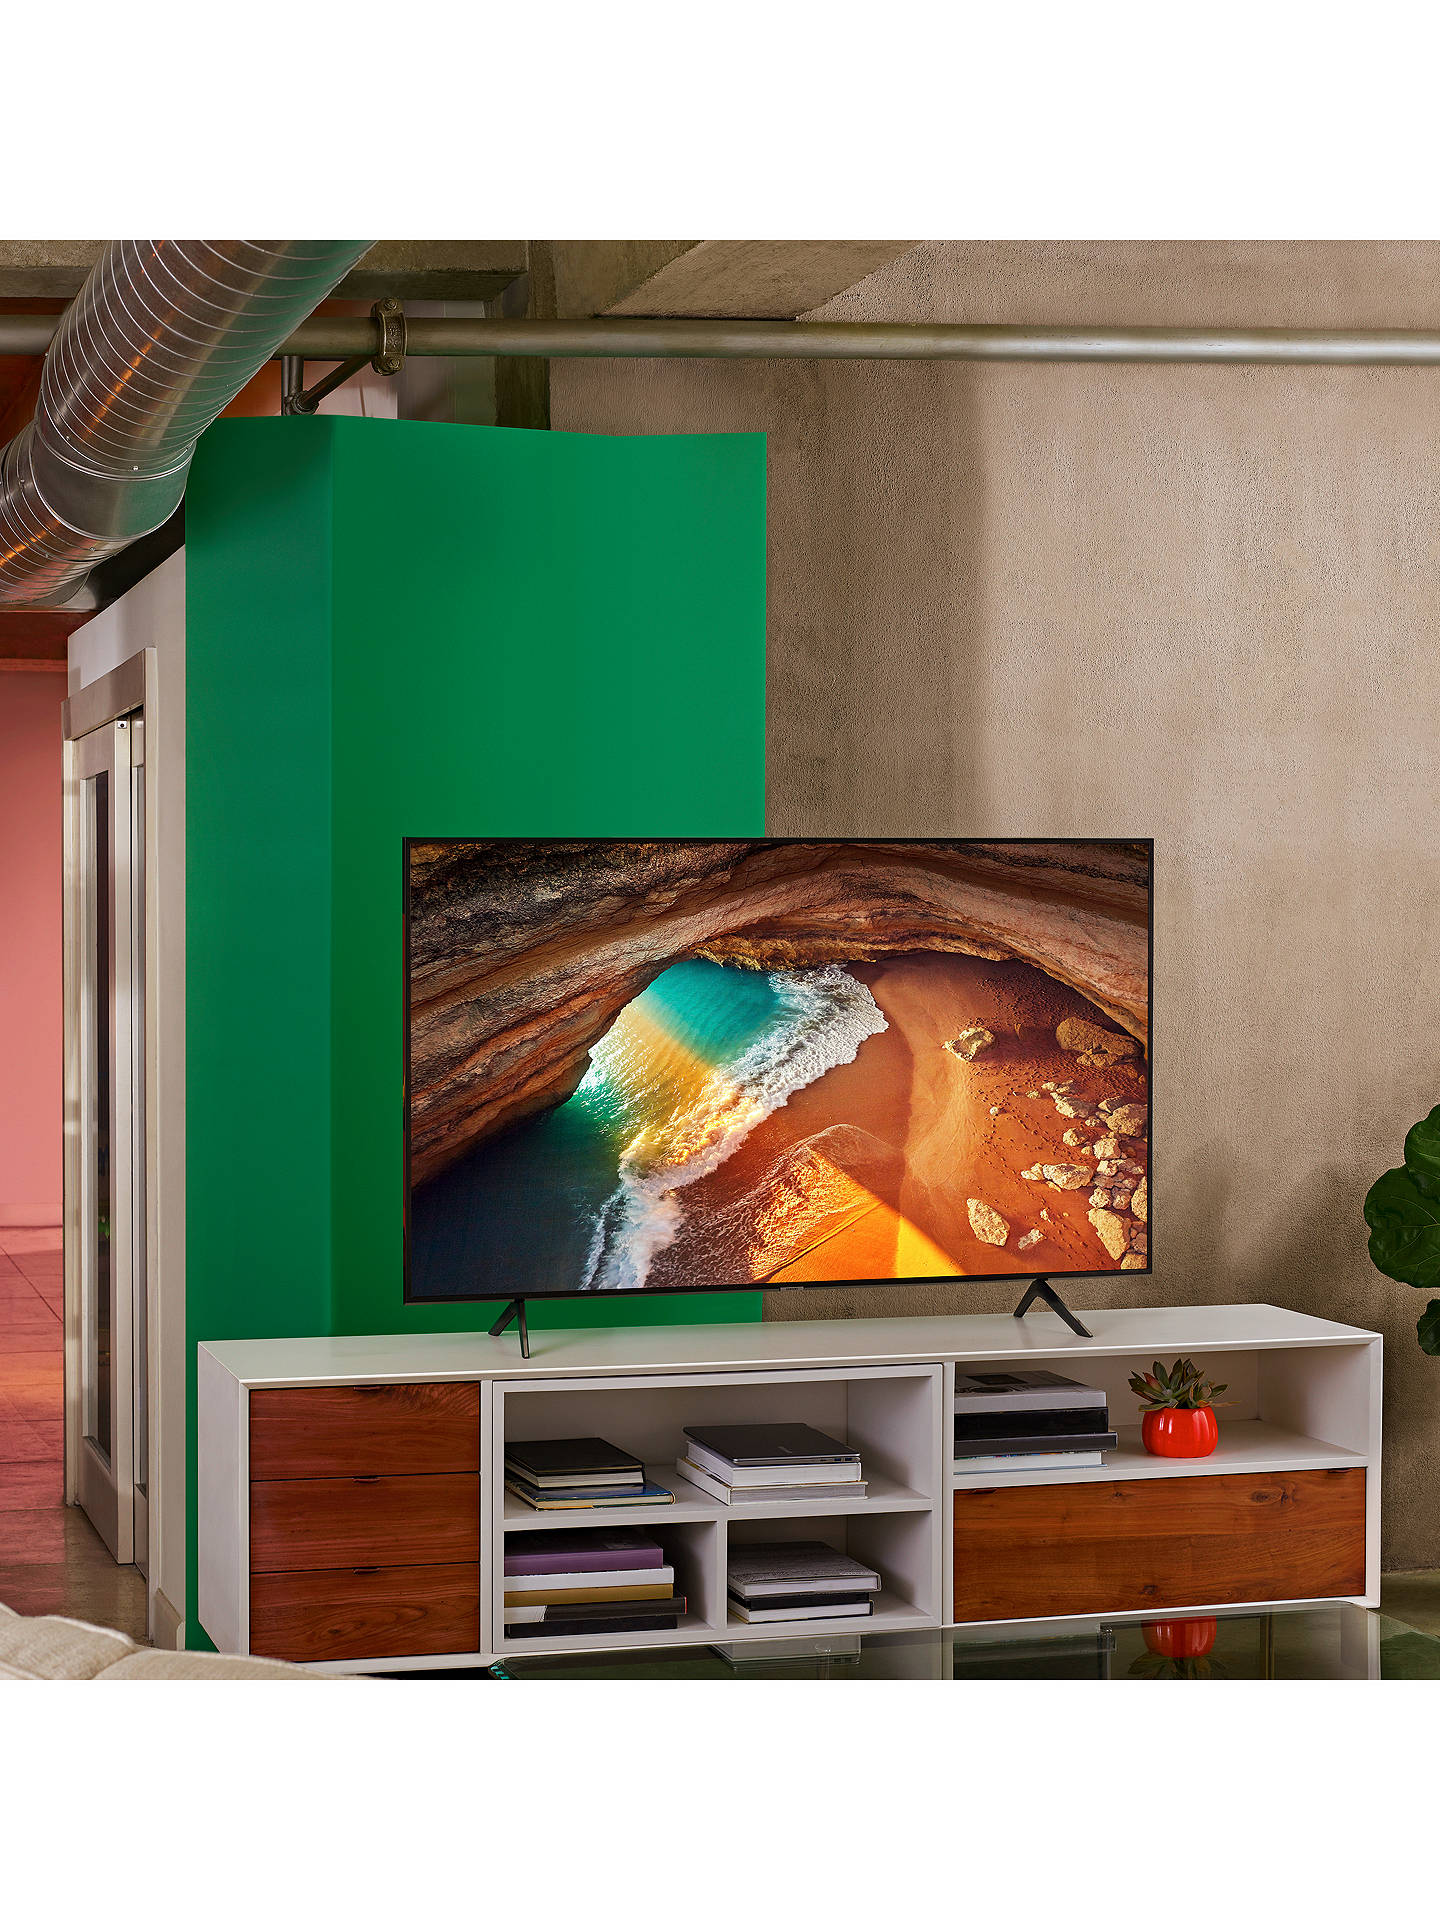 Samsung QE49Q60R (2019) QLED HDR 4K Ultra HD Smart TV, 49&quot; with TVPlus/Freesat HD & Apple TV App ...